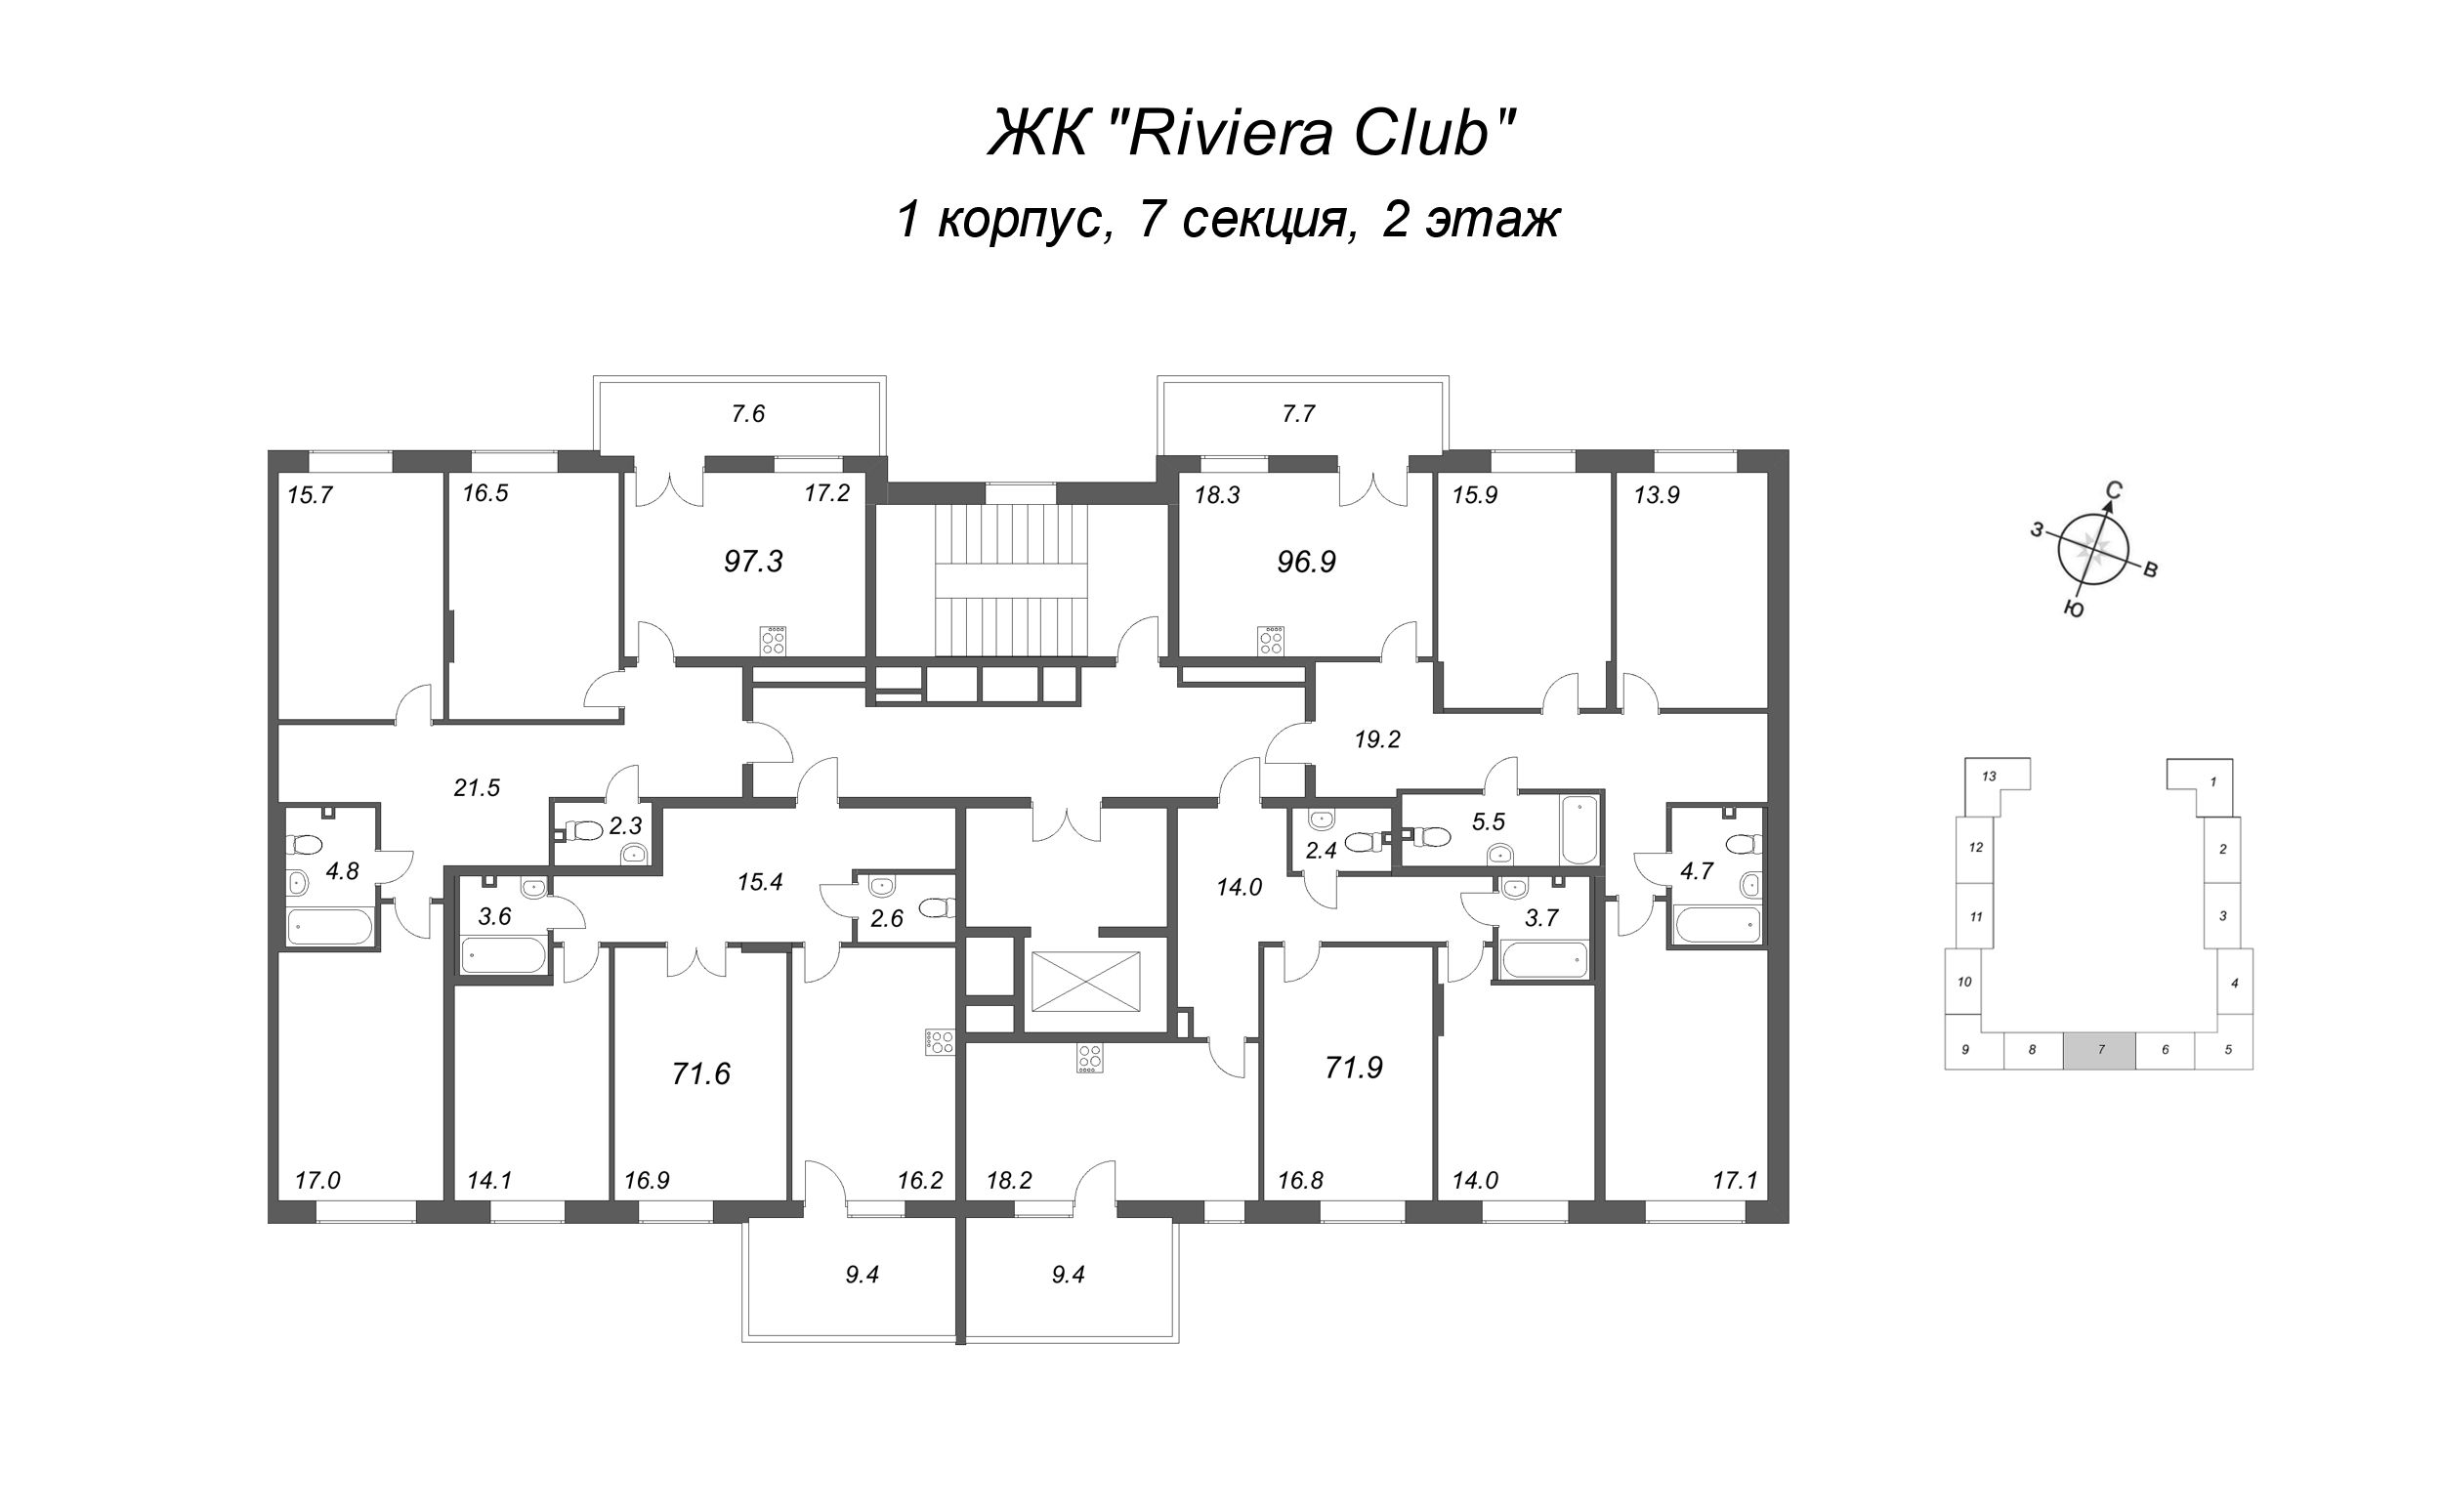 4-комнатная (Евро) квартира, 96.9 м² в ЖК "Riviera Club" - планировка этажа